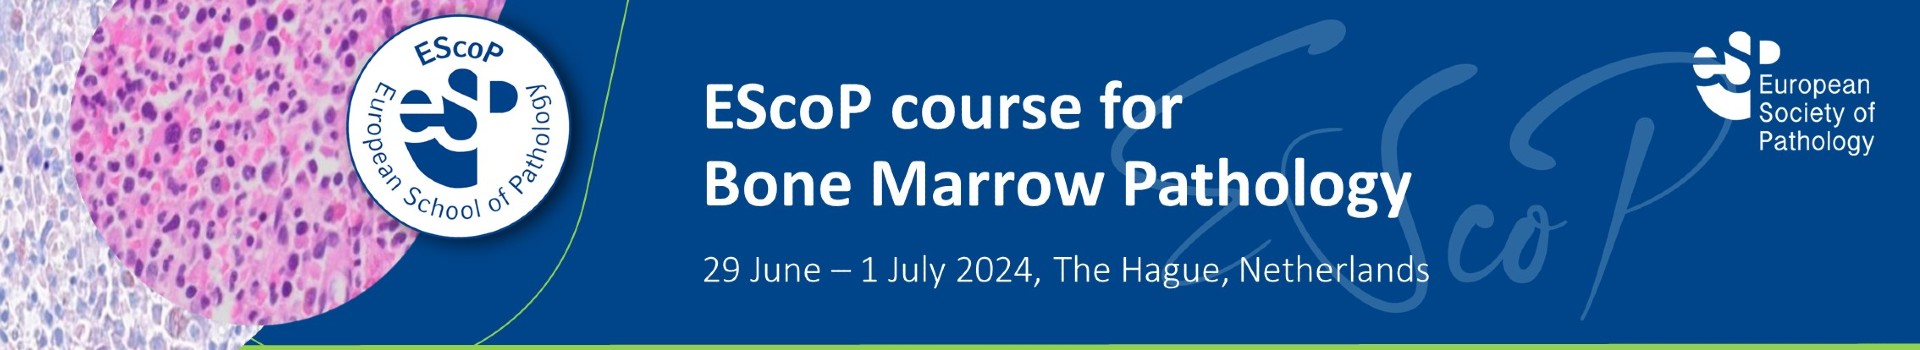 EScoP course for Bone Marrow Pathology 